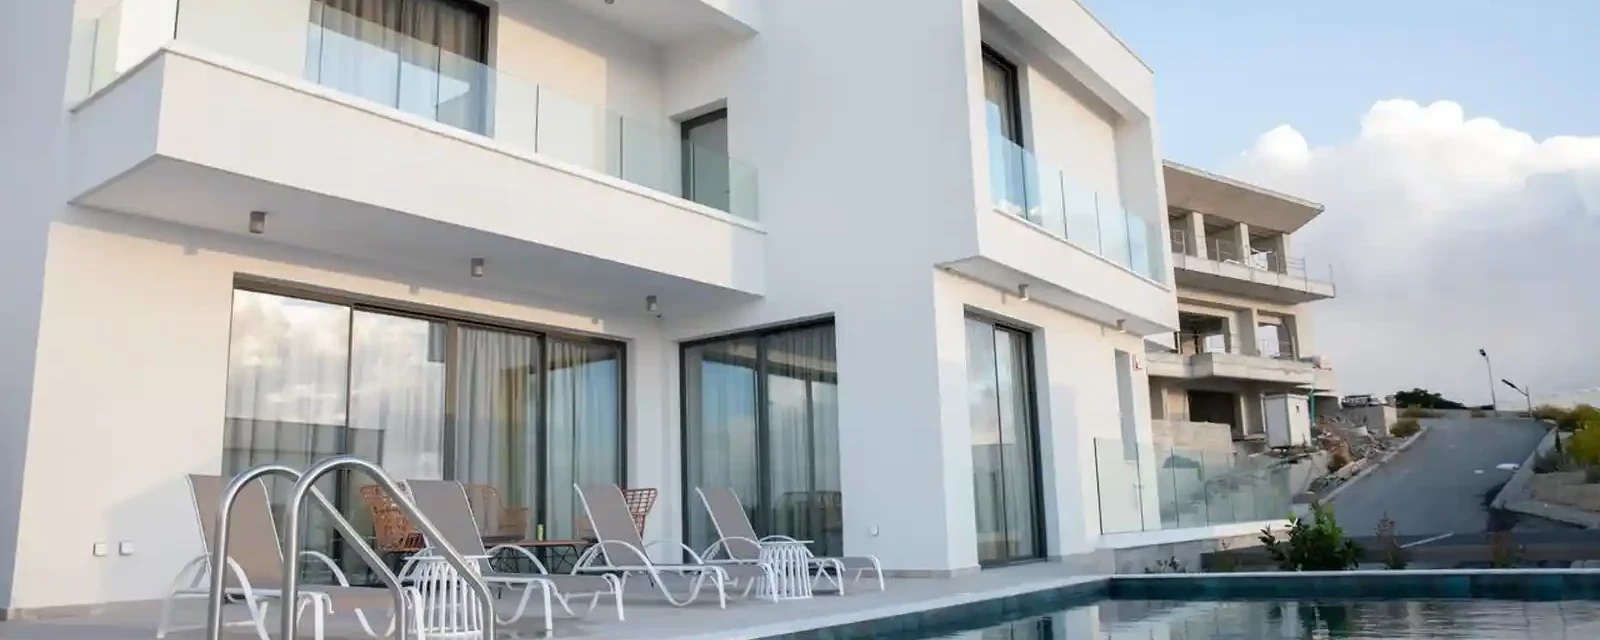 4-bedroom villa fоr sаle €1.100.000, image 1